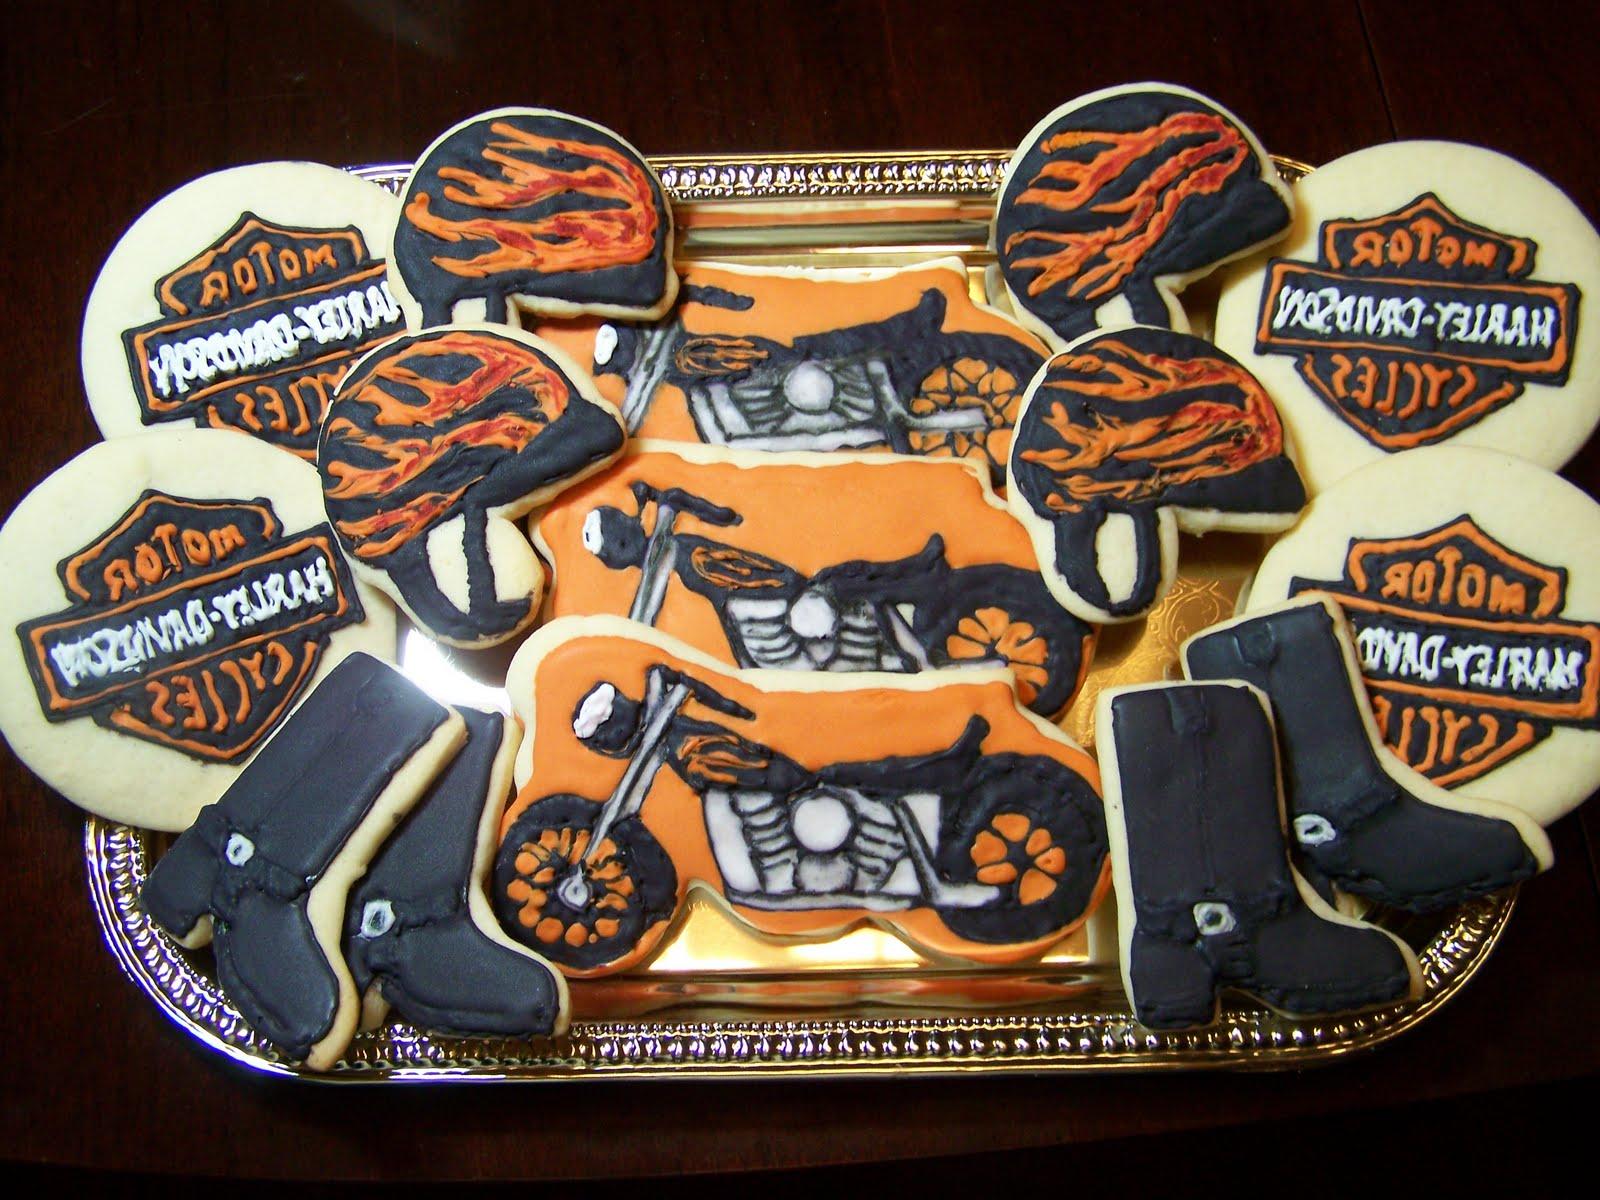 Harley Davidson cookies.